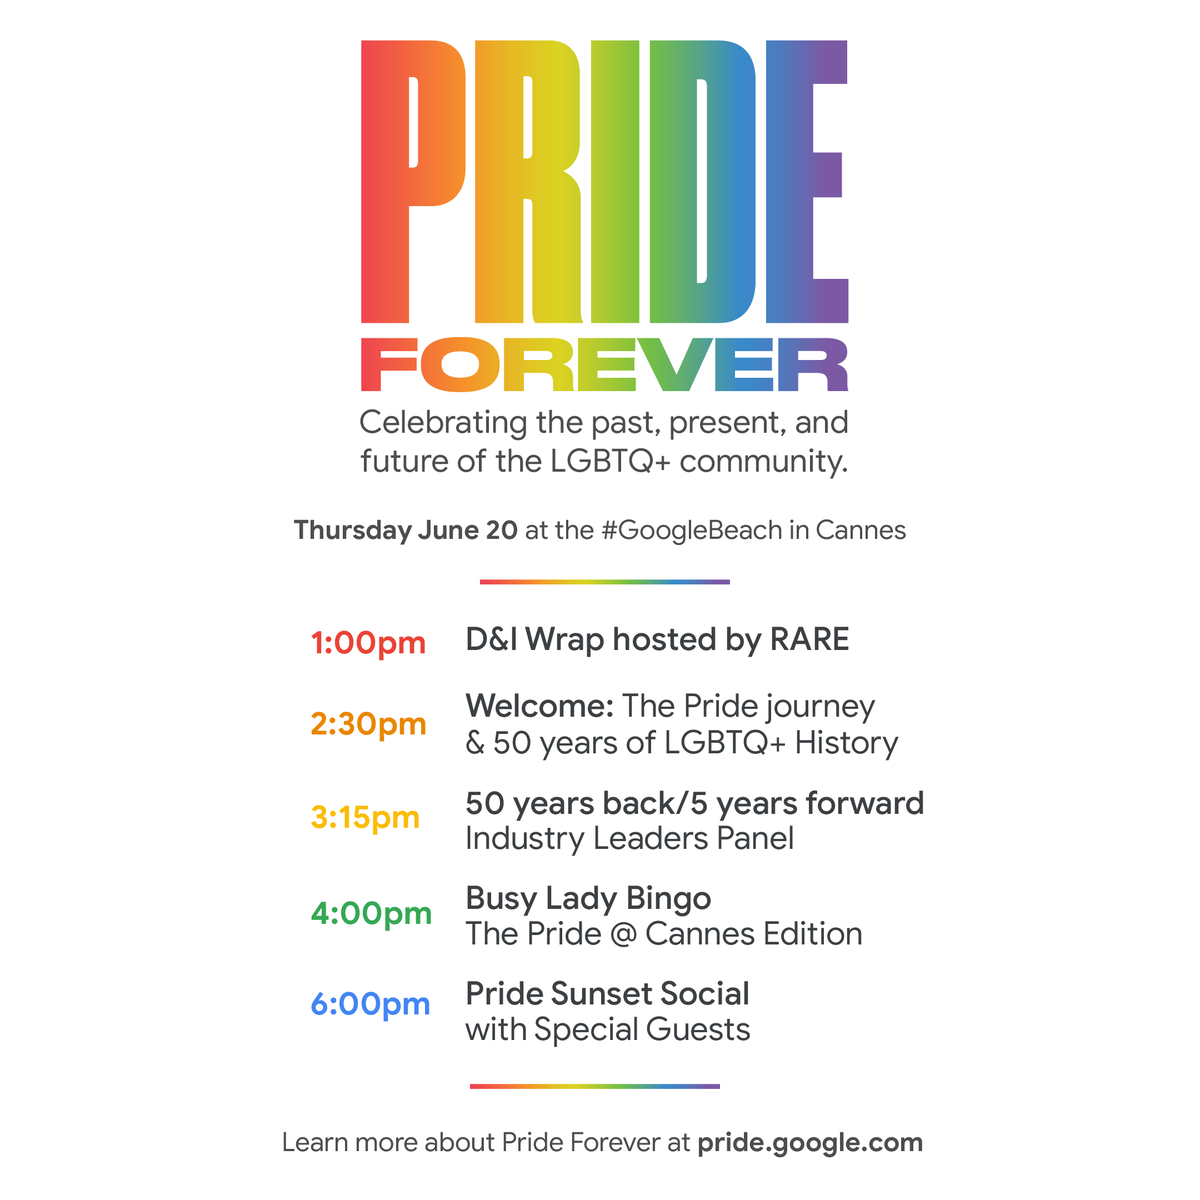 Looking forward to celebrating Pride tomorrow on the #GoogleBeach!